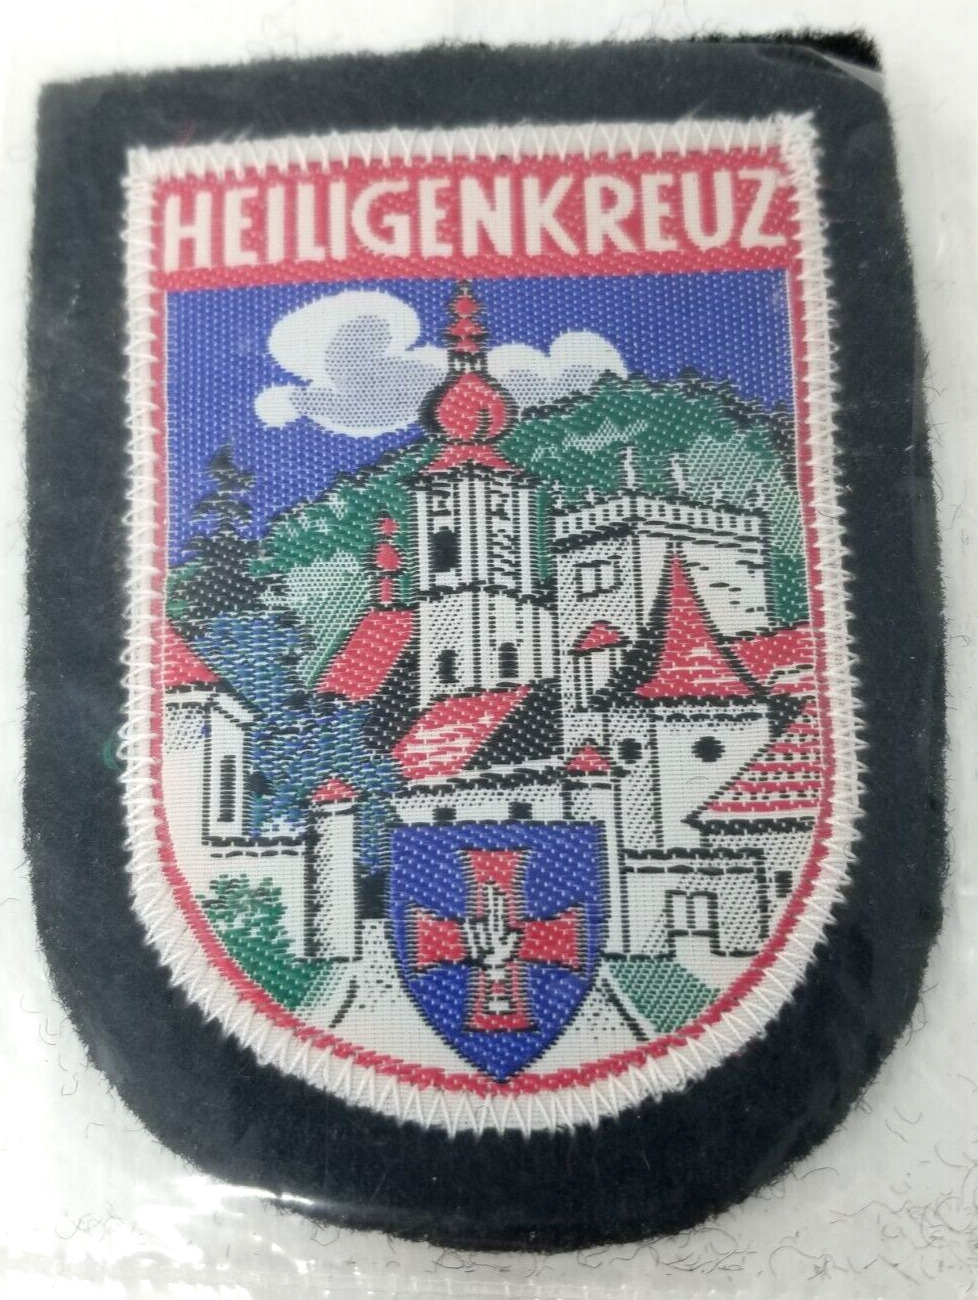 Austria Heiligenkreuz Abbey Patch Shield Crest Red Blue Green 1970s